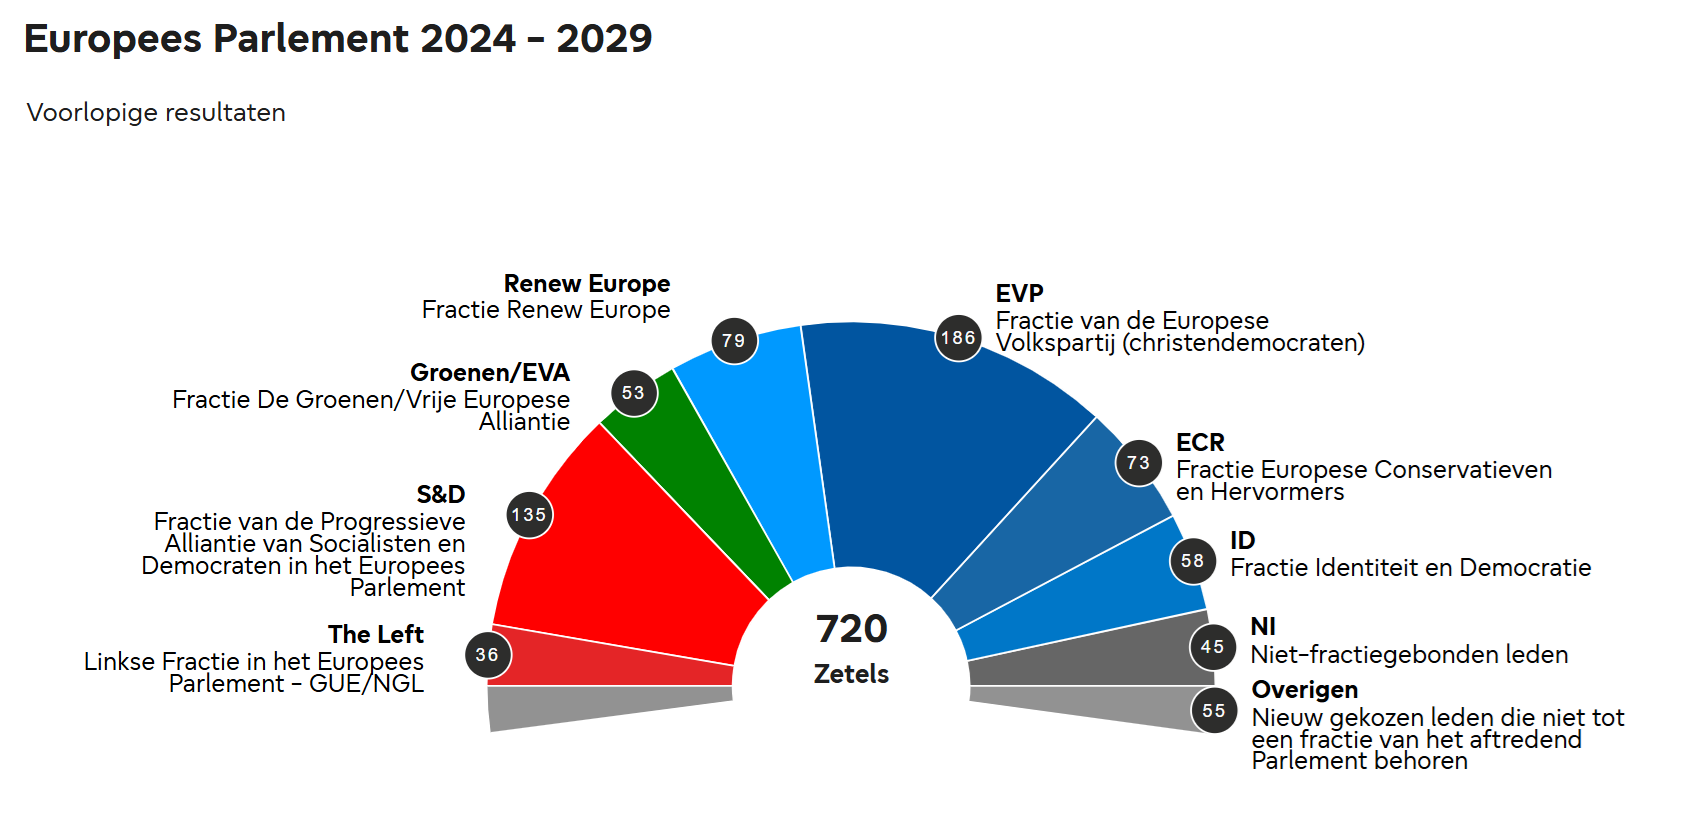 europees parlement 2024 2029 voorlopige resultaten